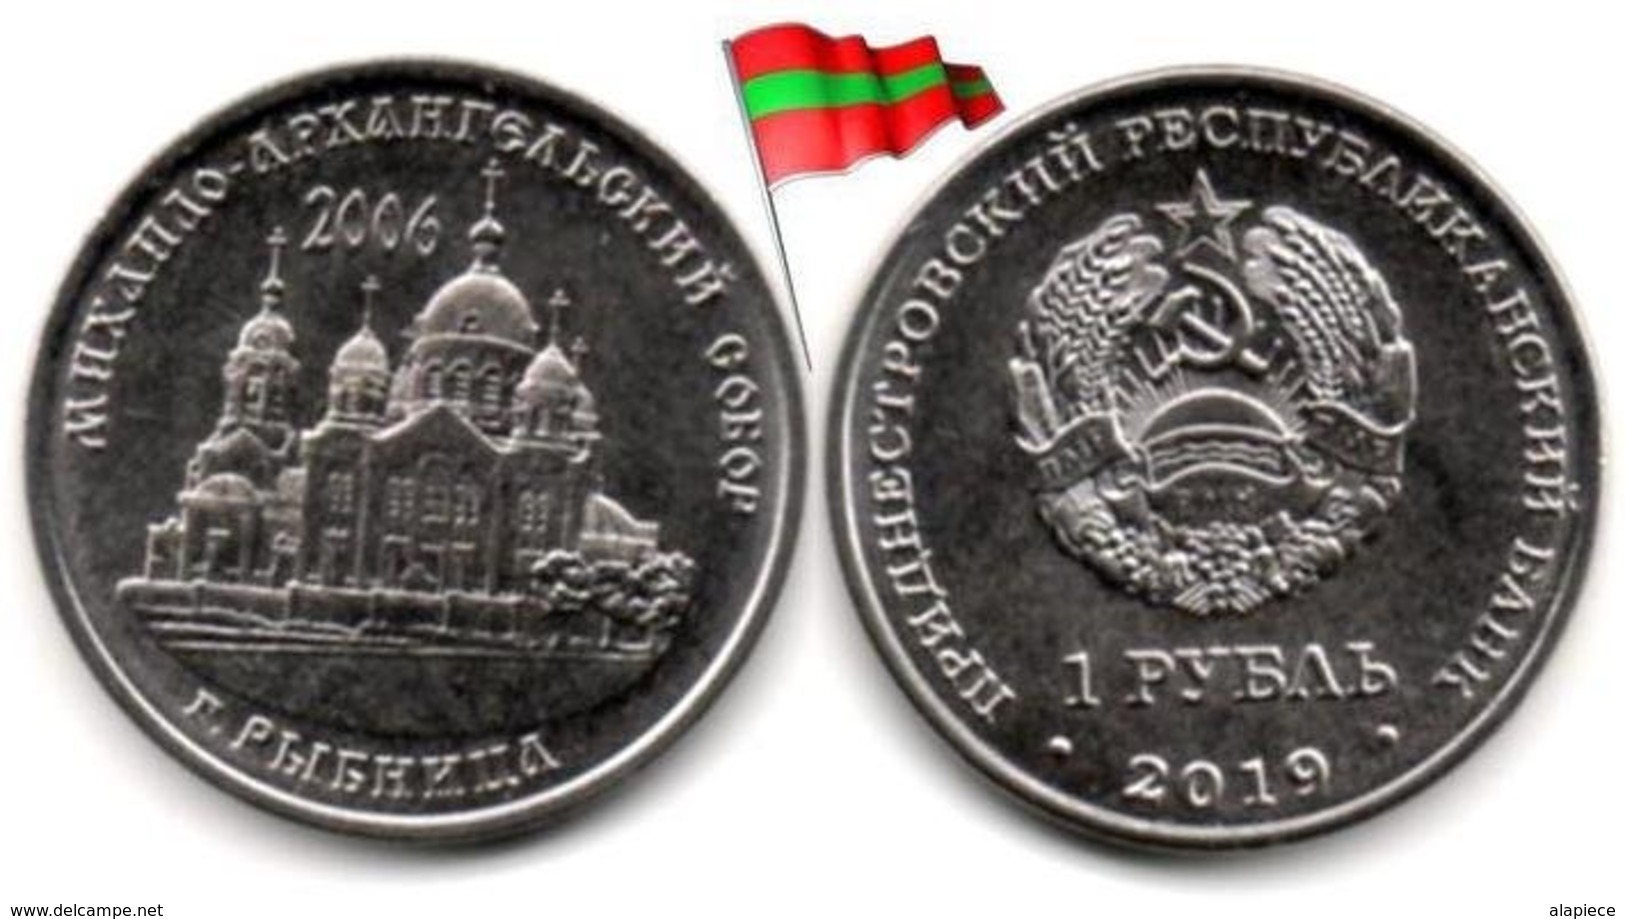 Transnistria - 1 Rouble 2019 (St. Michael The Archangel Cathedral Rybnitsa - 50,000 Ex.) - Moldavie